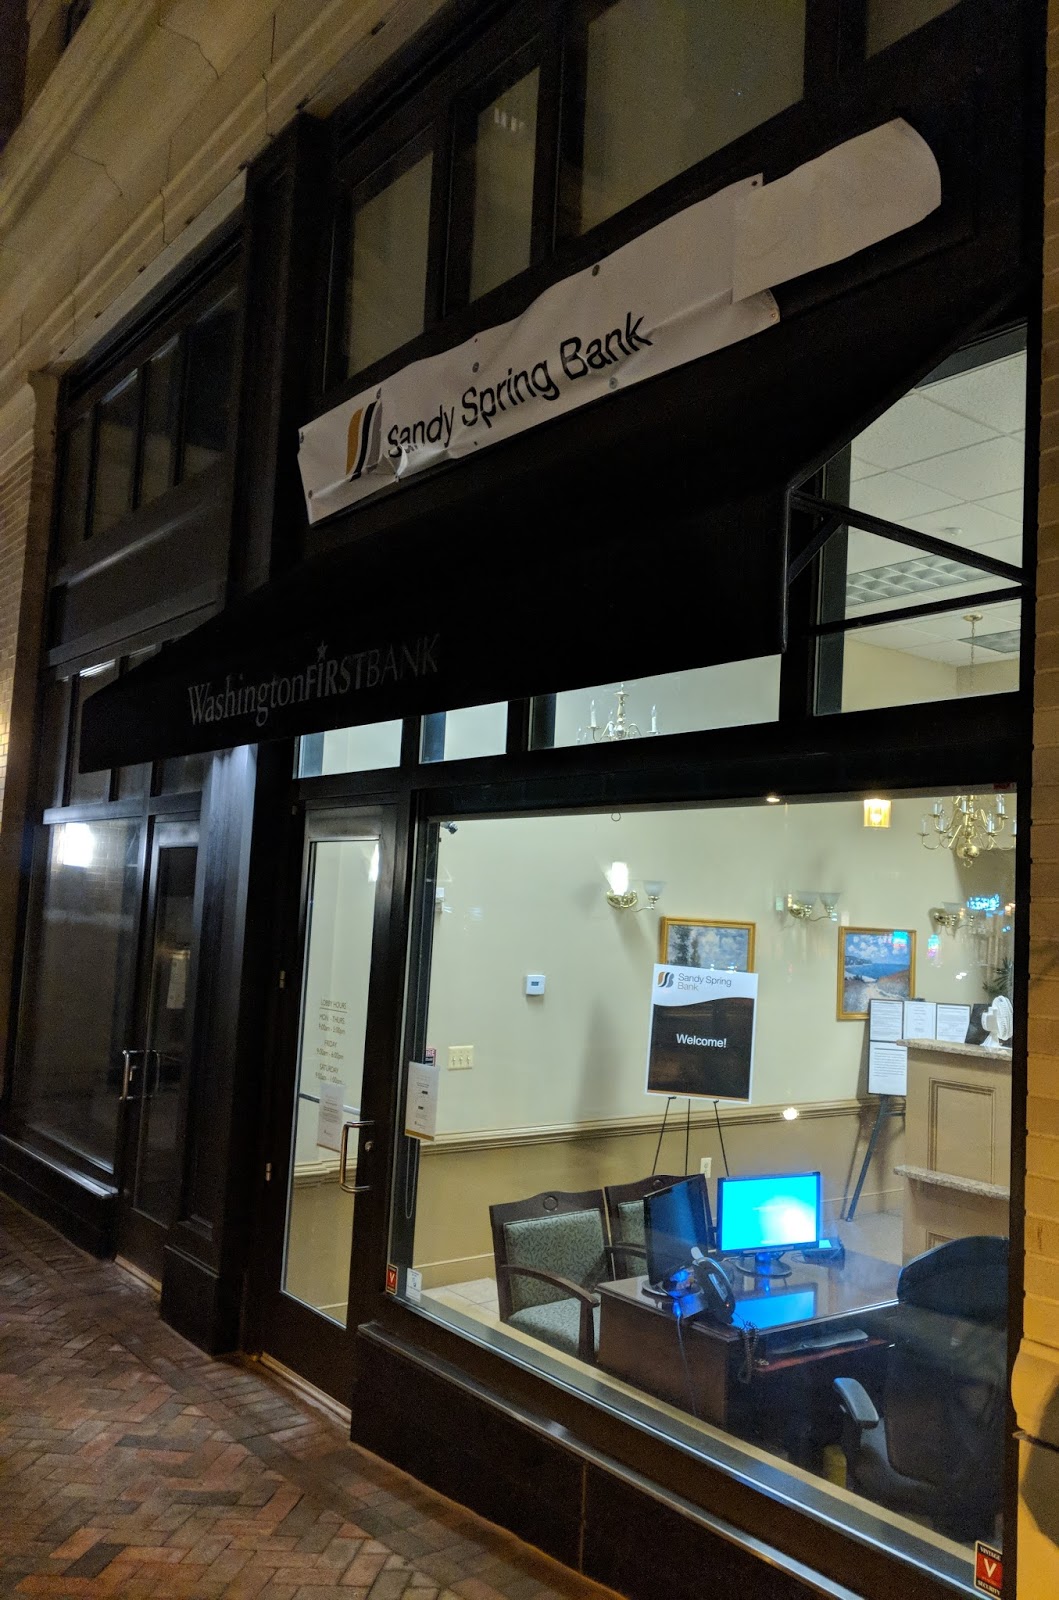 Robert Dyer @ Bethesda Row: Washington First Bank in Bethesda will be